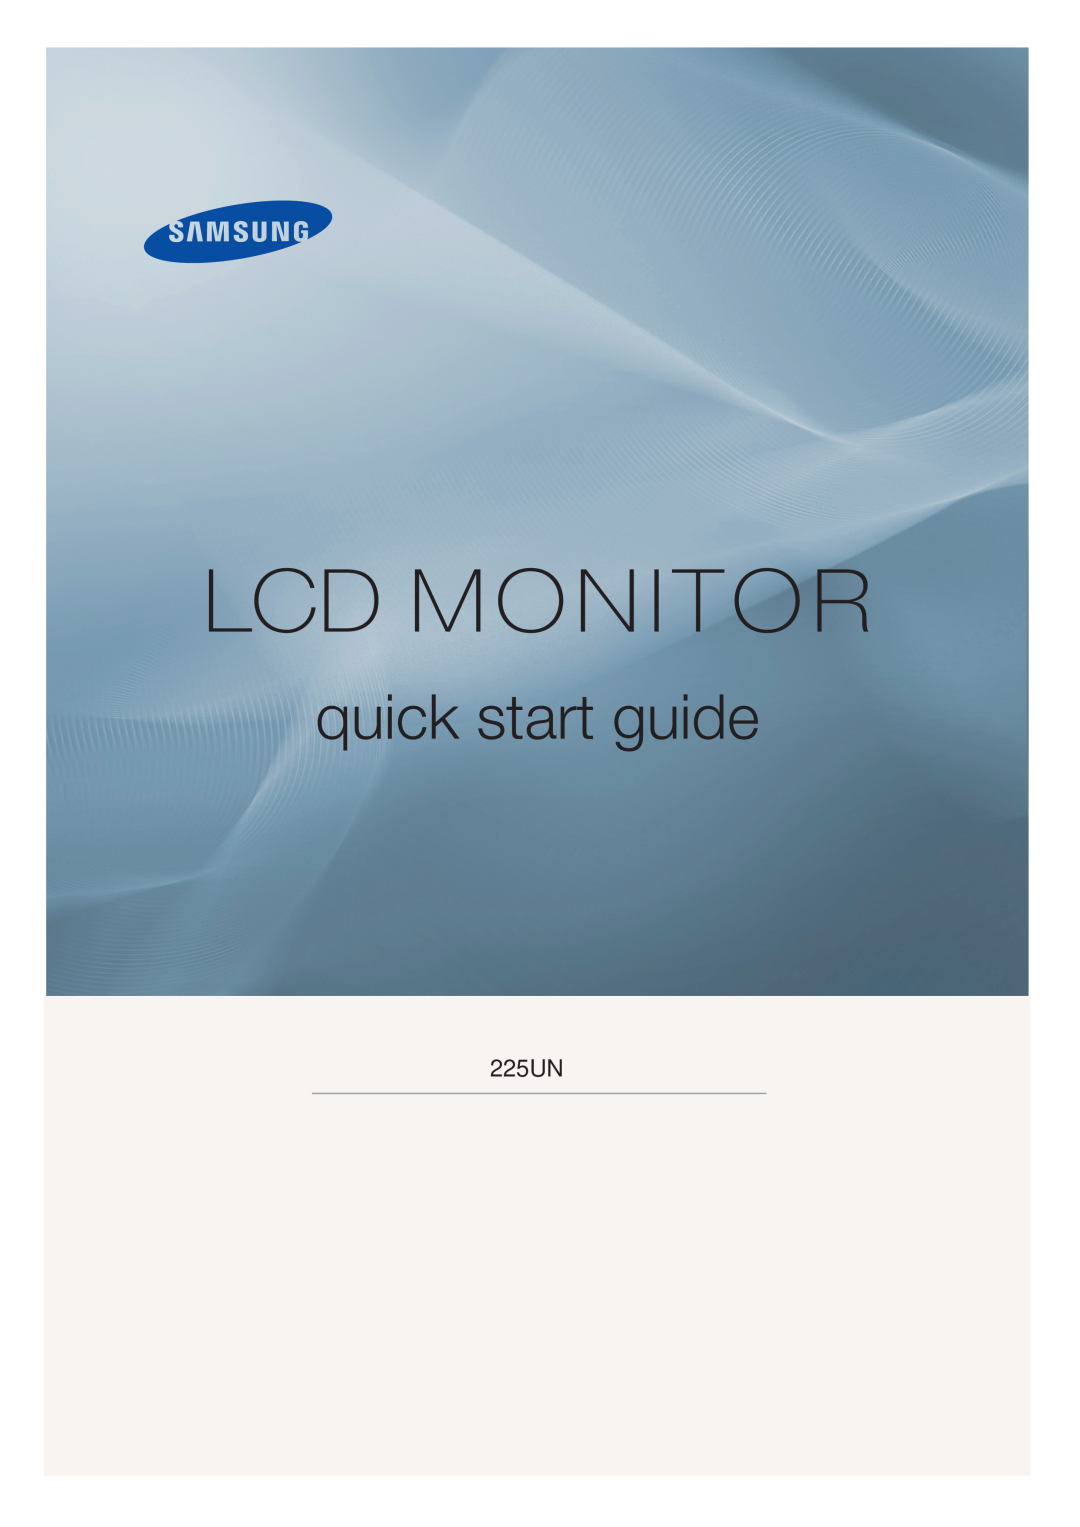 Samsung 225UN quick start Lcd Monitor, quick start guide 